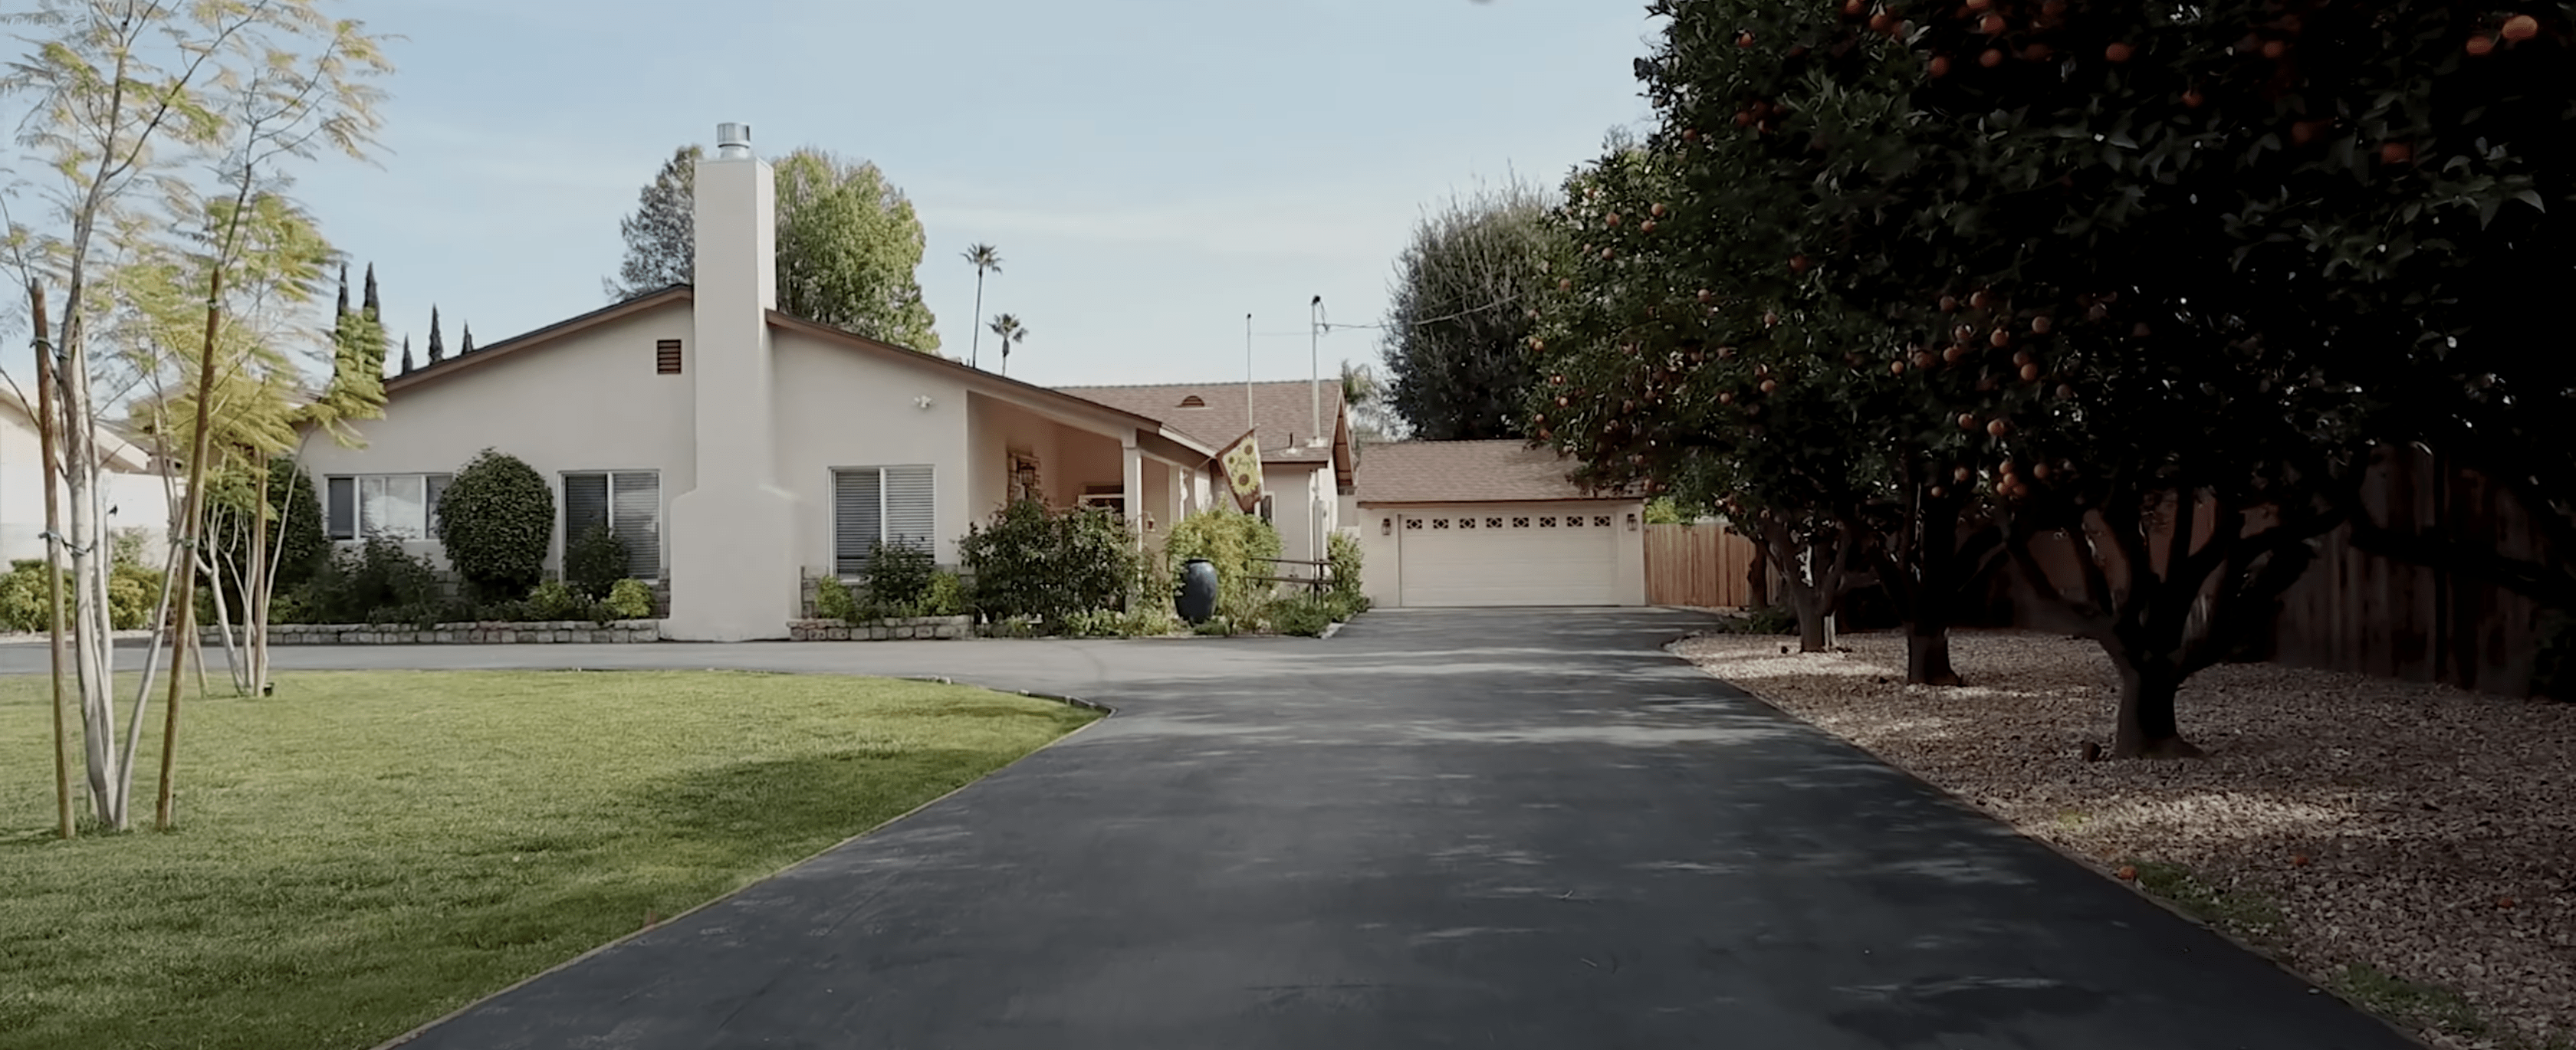 Photo of Grant Serenity Homes of San Fernando Valley